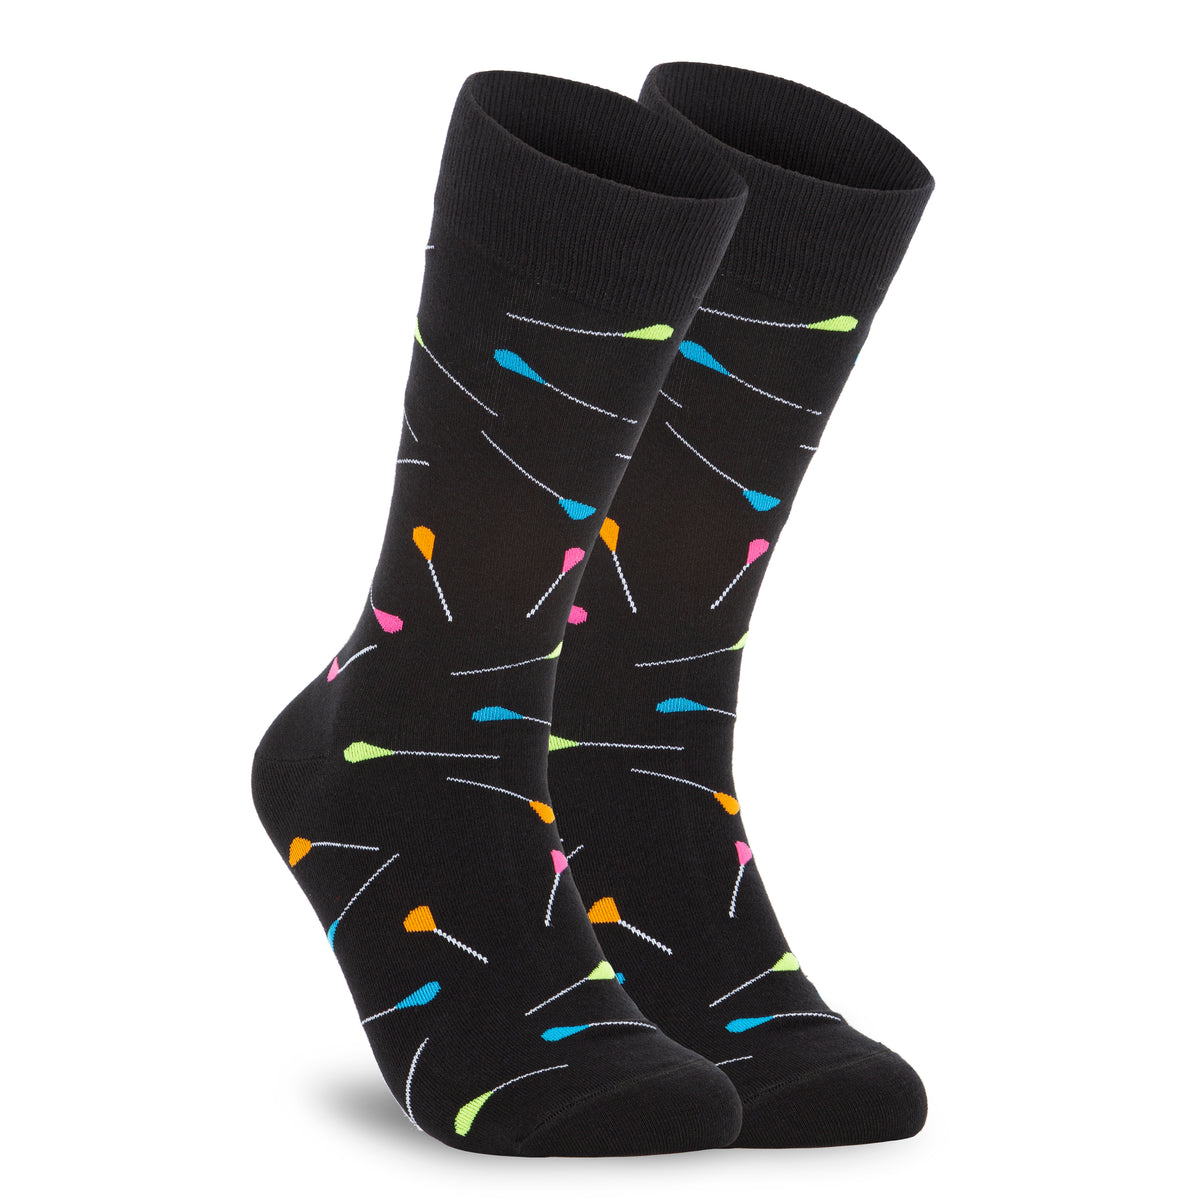 Lacrosse Socks With Neon Sticks